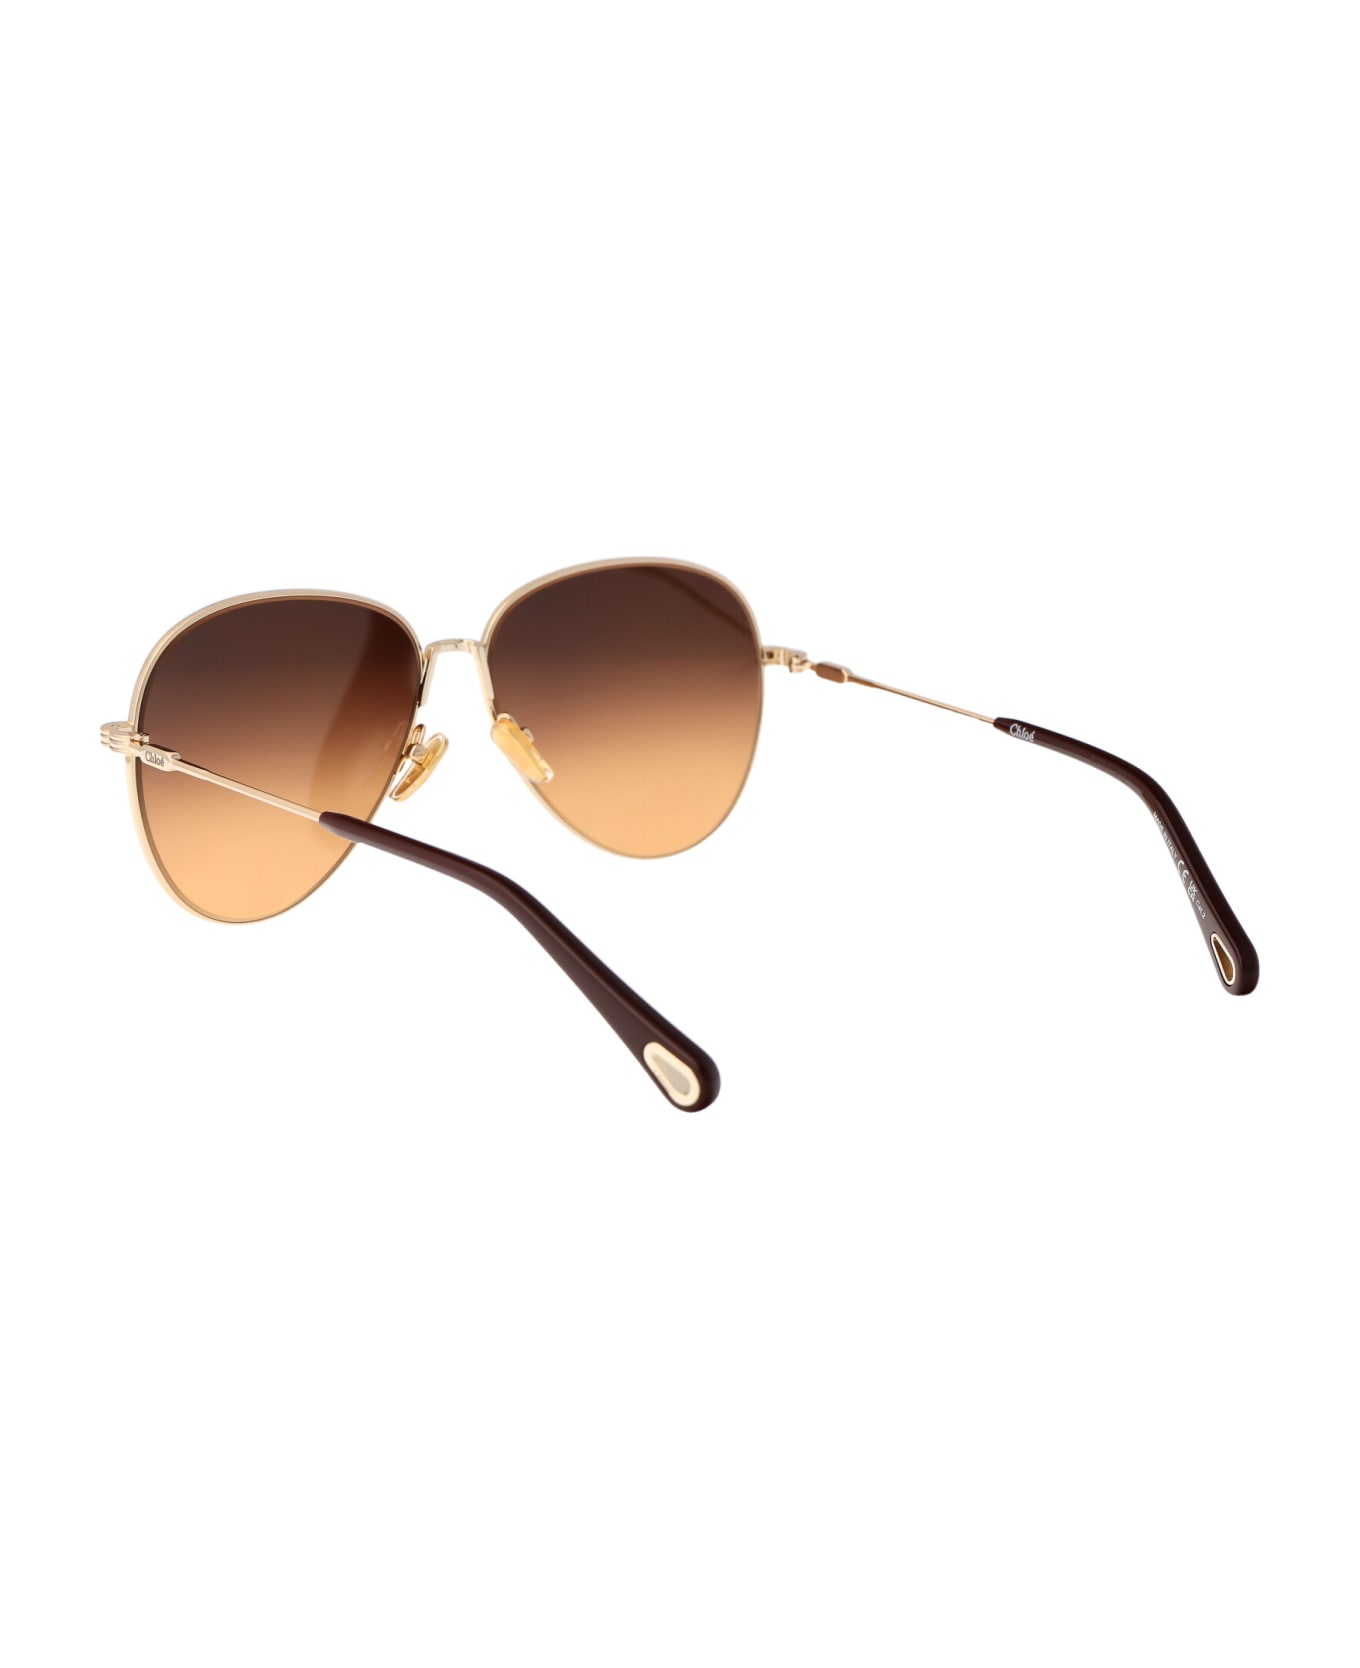 Chloé Eyewear Ch0177s Sunglasses - 003 GOLD GOLD ORANGE サングラス